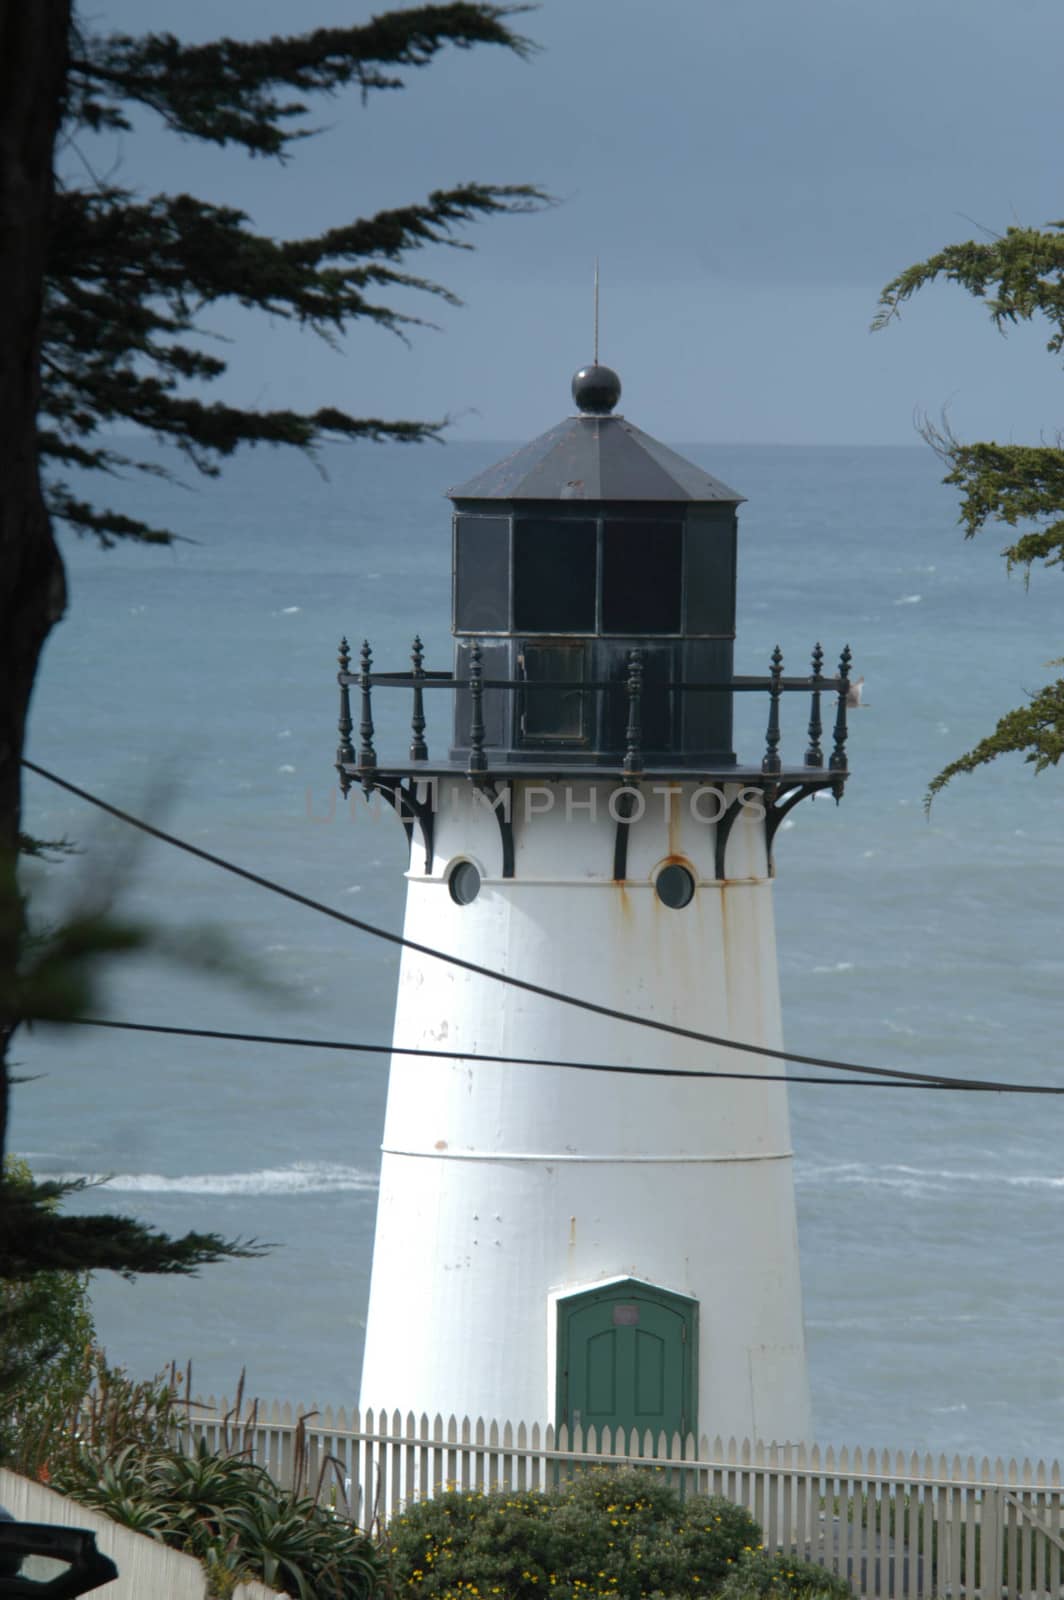 Pt Montara Lighthouse Hostel by cestes001